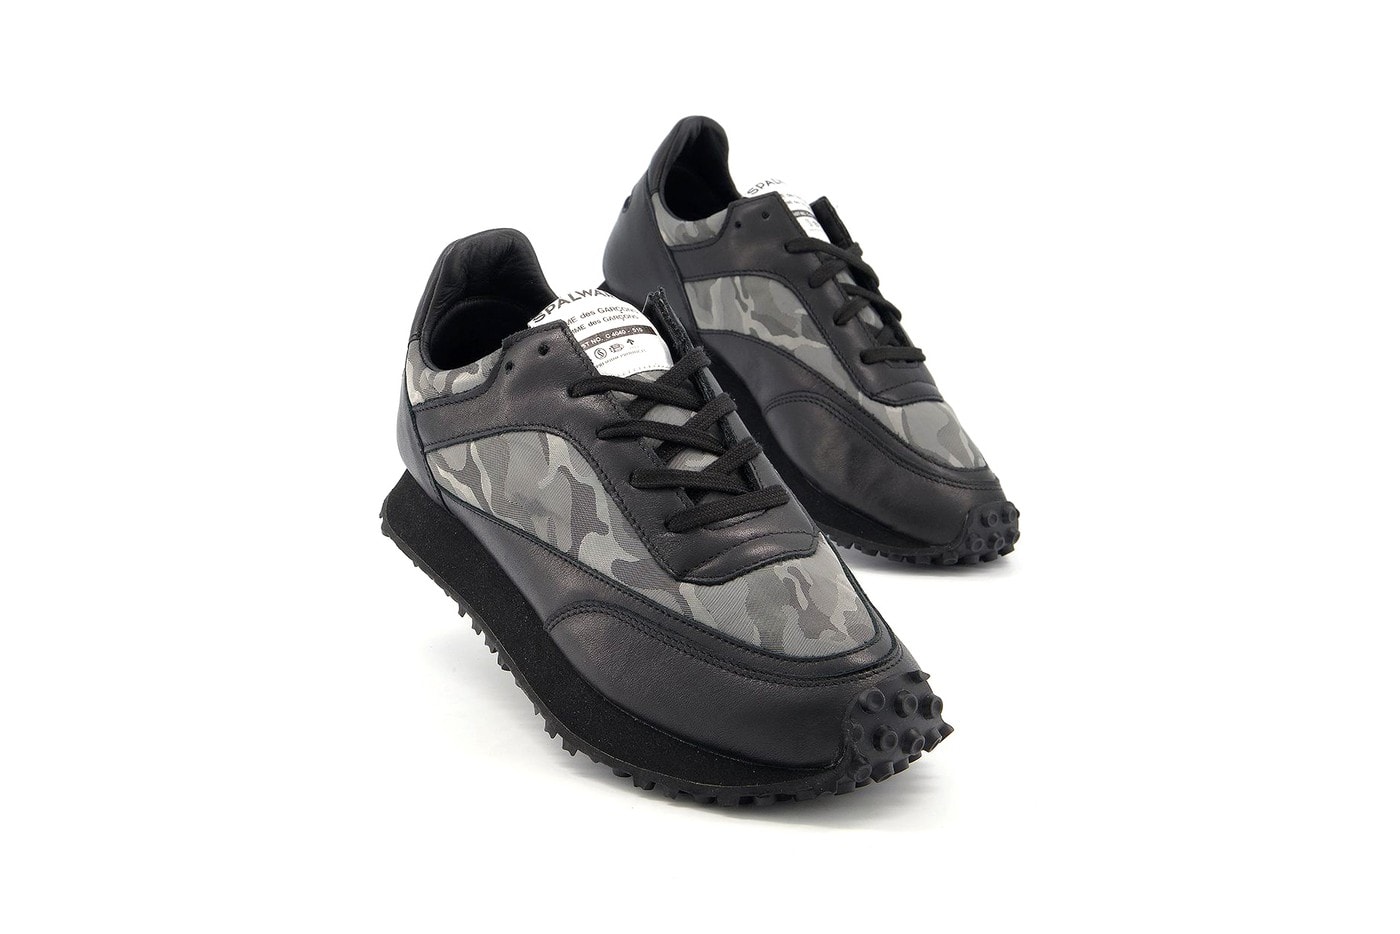 COMME des GARÇONS x Spalwart 推出「灰色迷彩」聯名鞋款